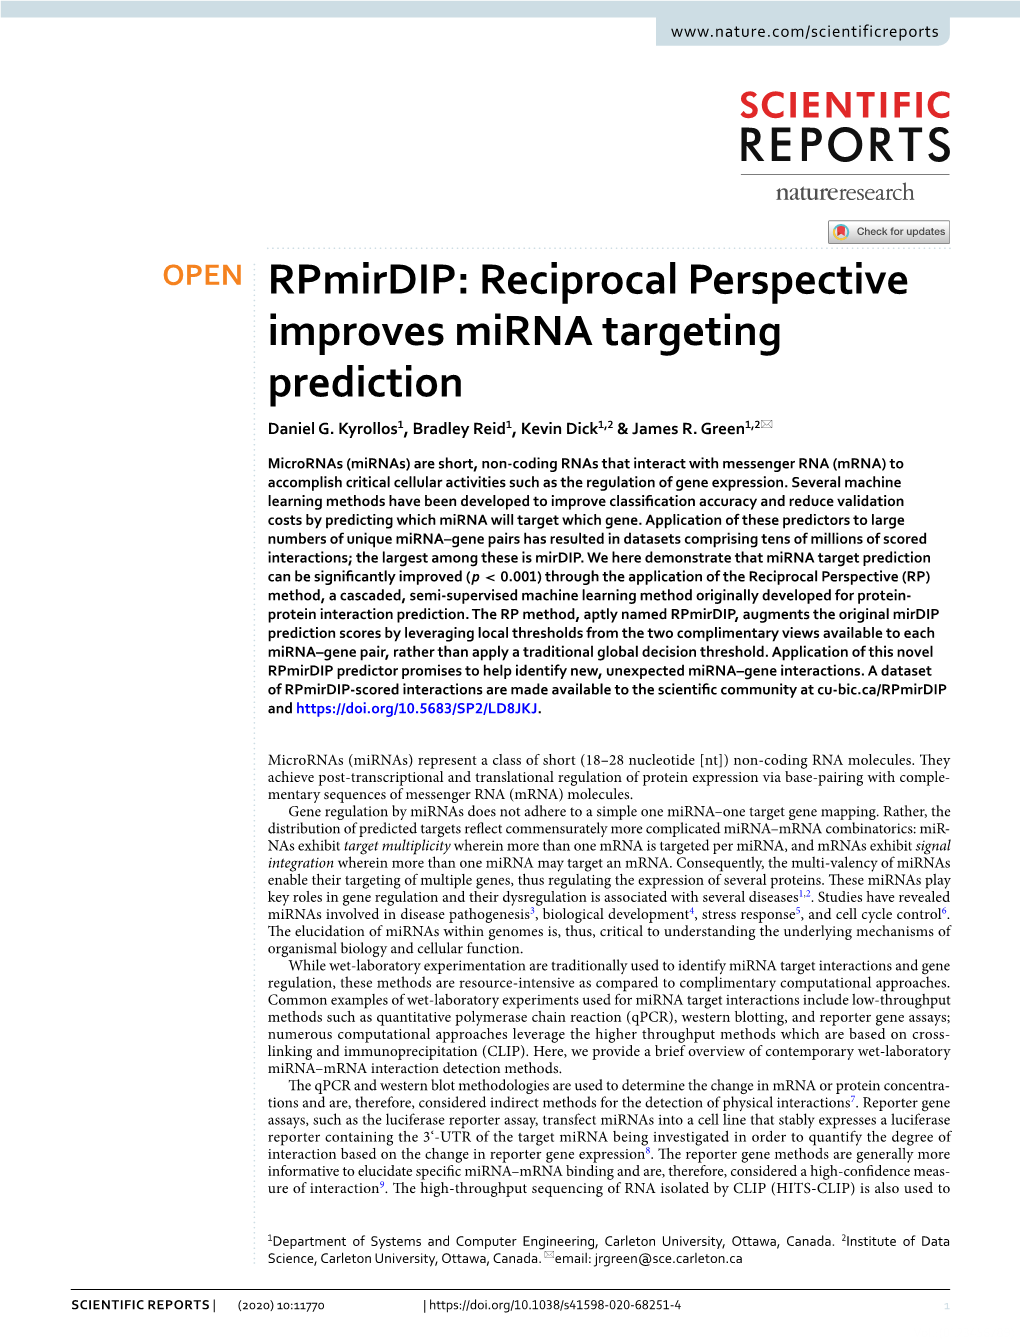 Reciprocal Perspective Improves Mirna Targeting Prediction Daniel G